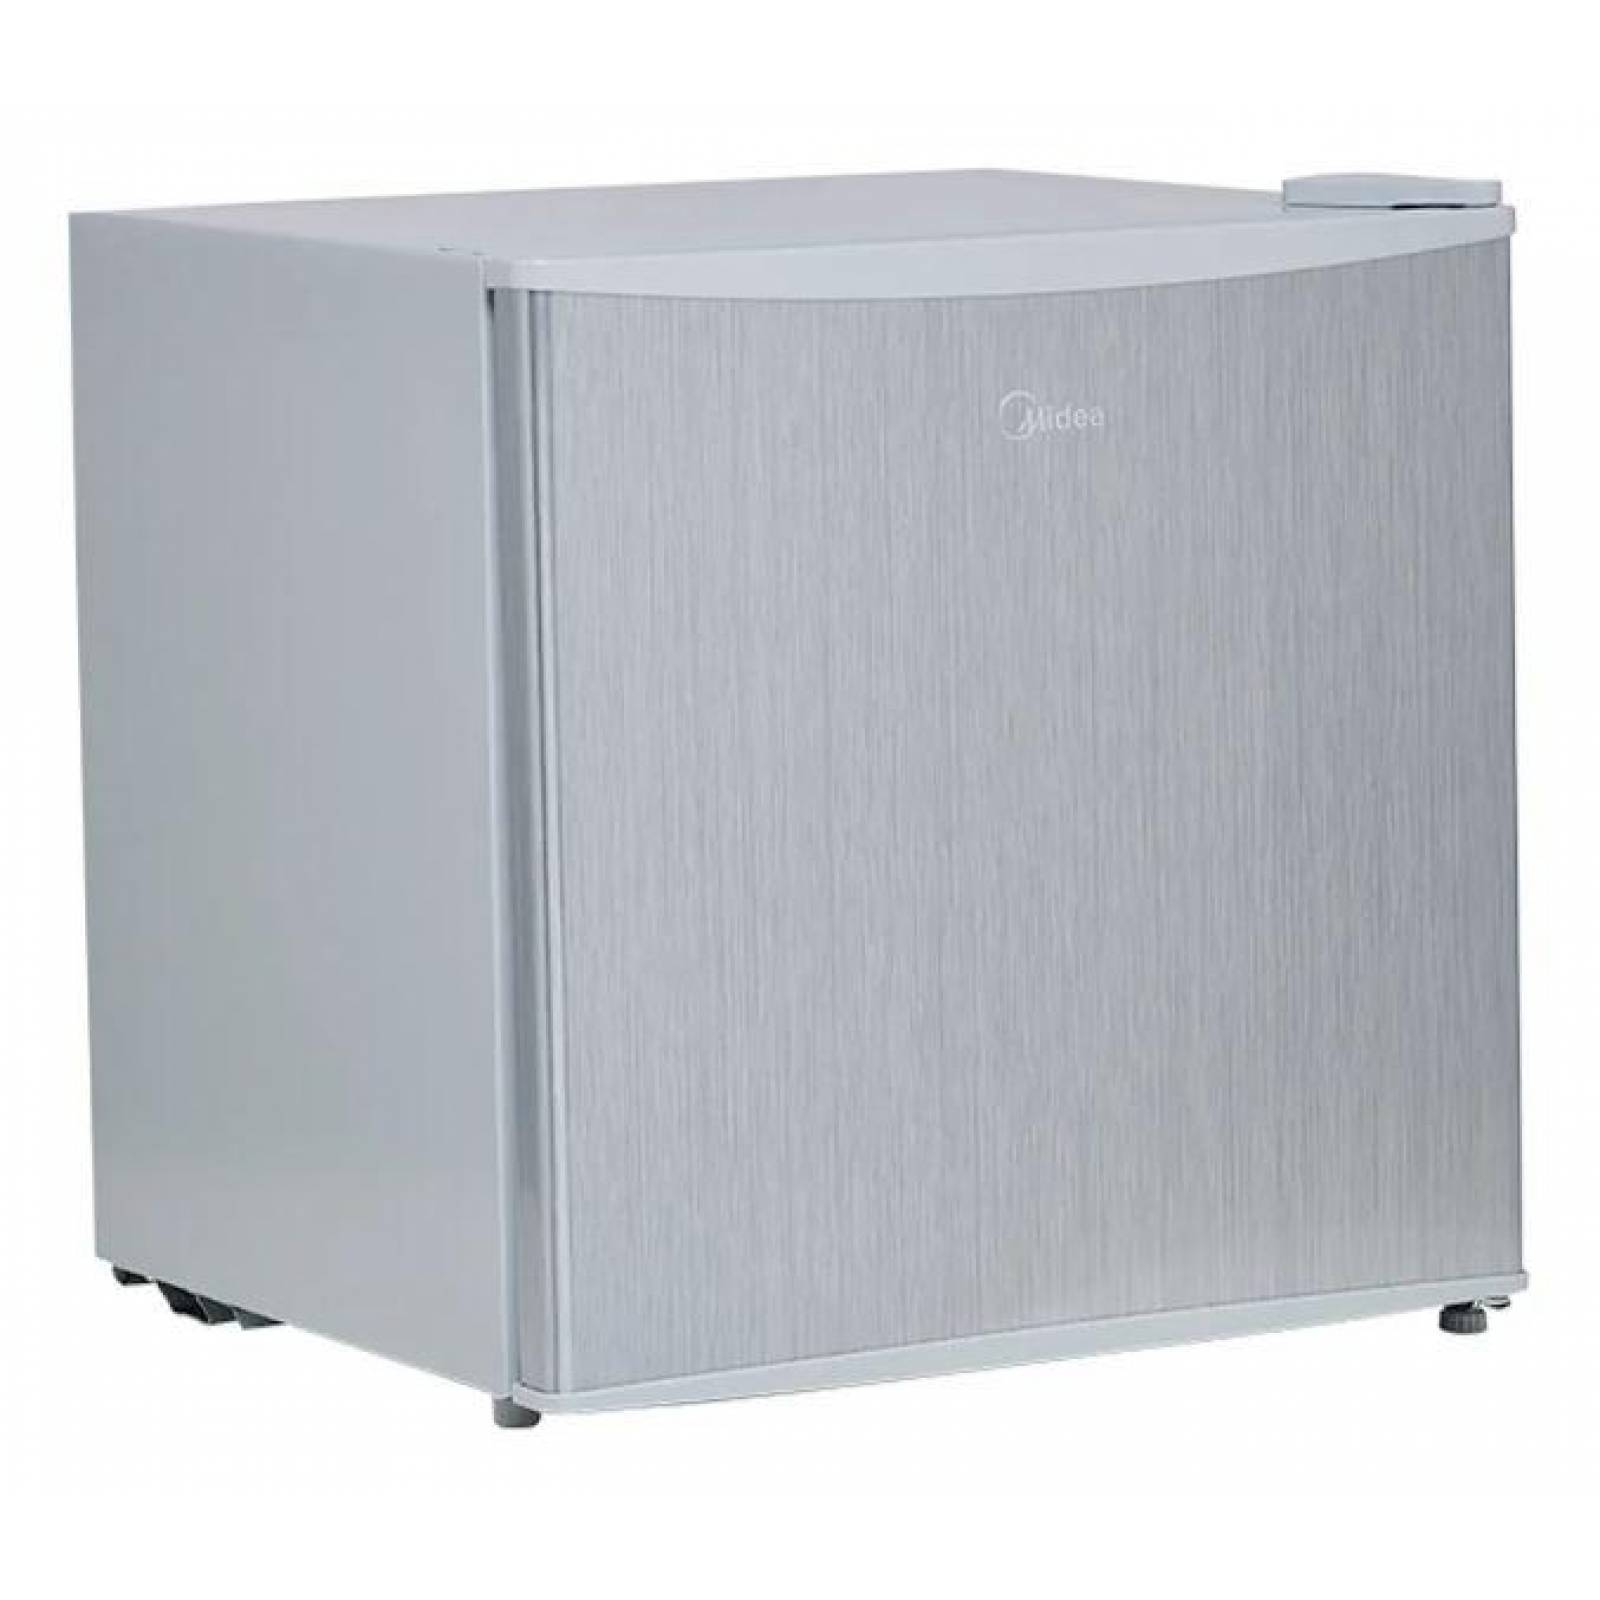 Frigobar Refrigerador Midea Mrdd02g2nbg2 1.6 Pies Congelador 